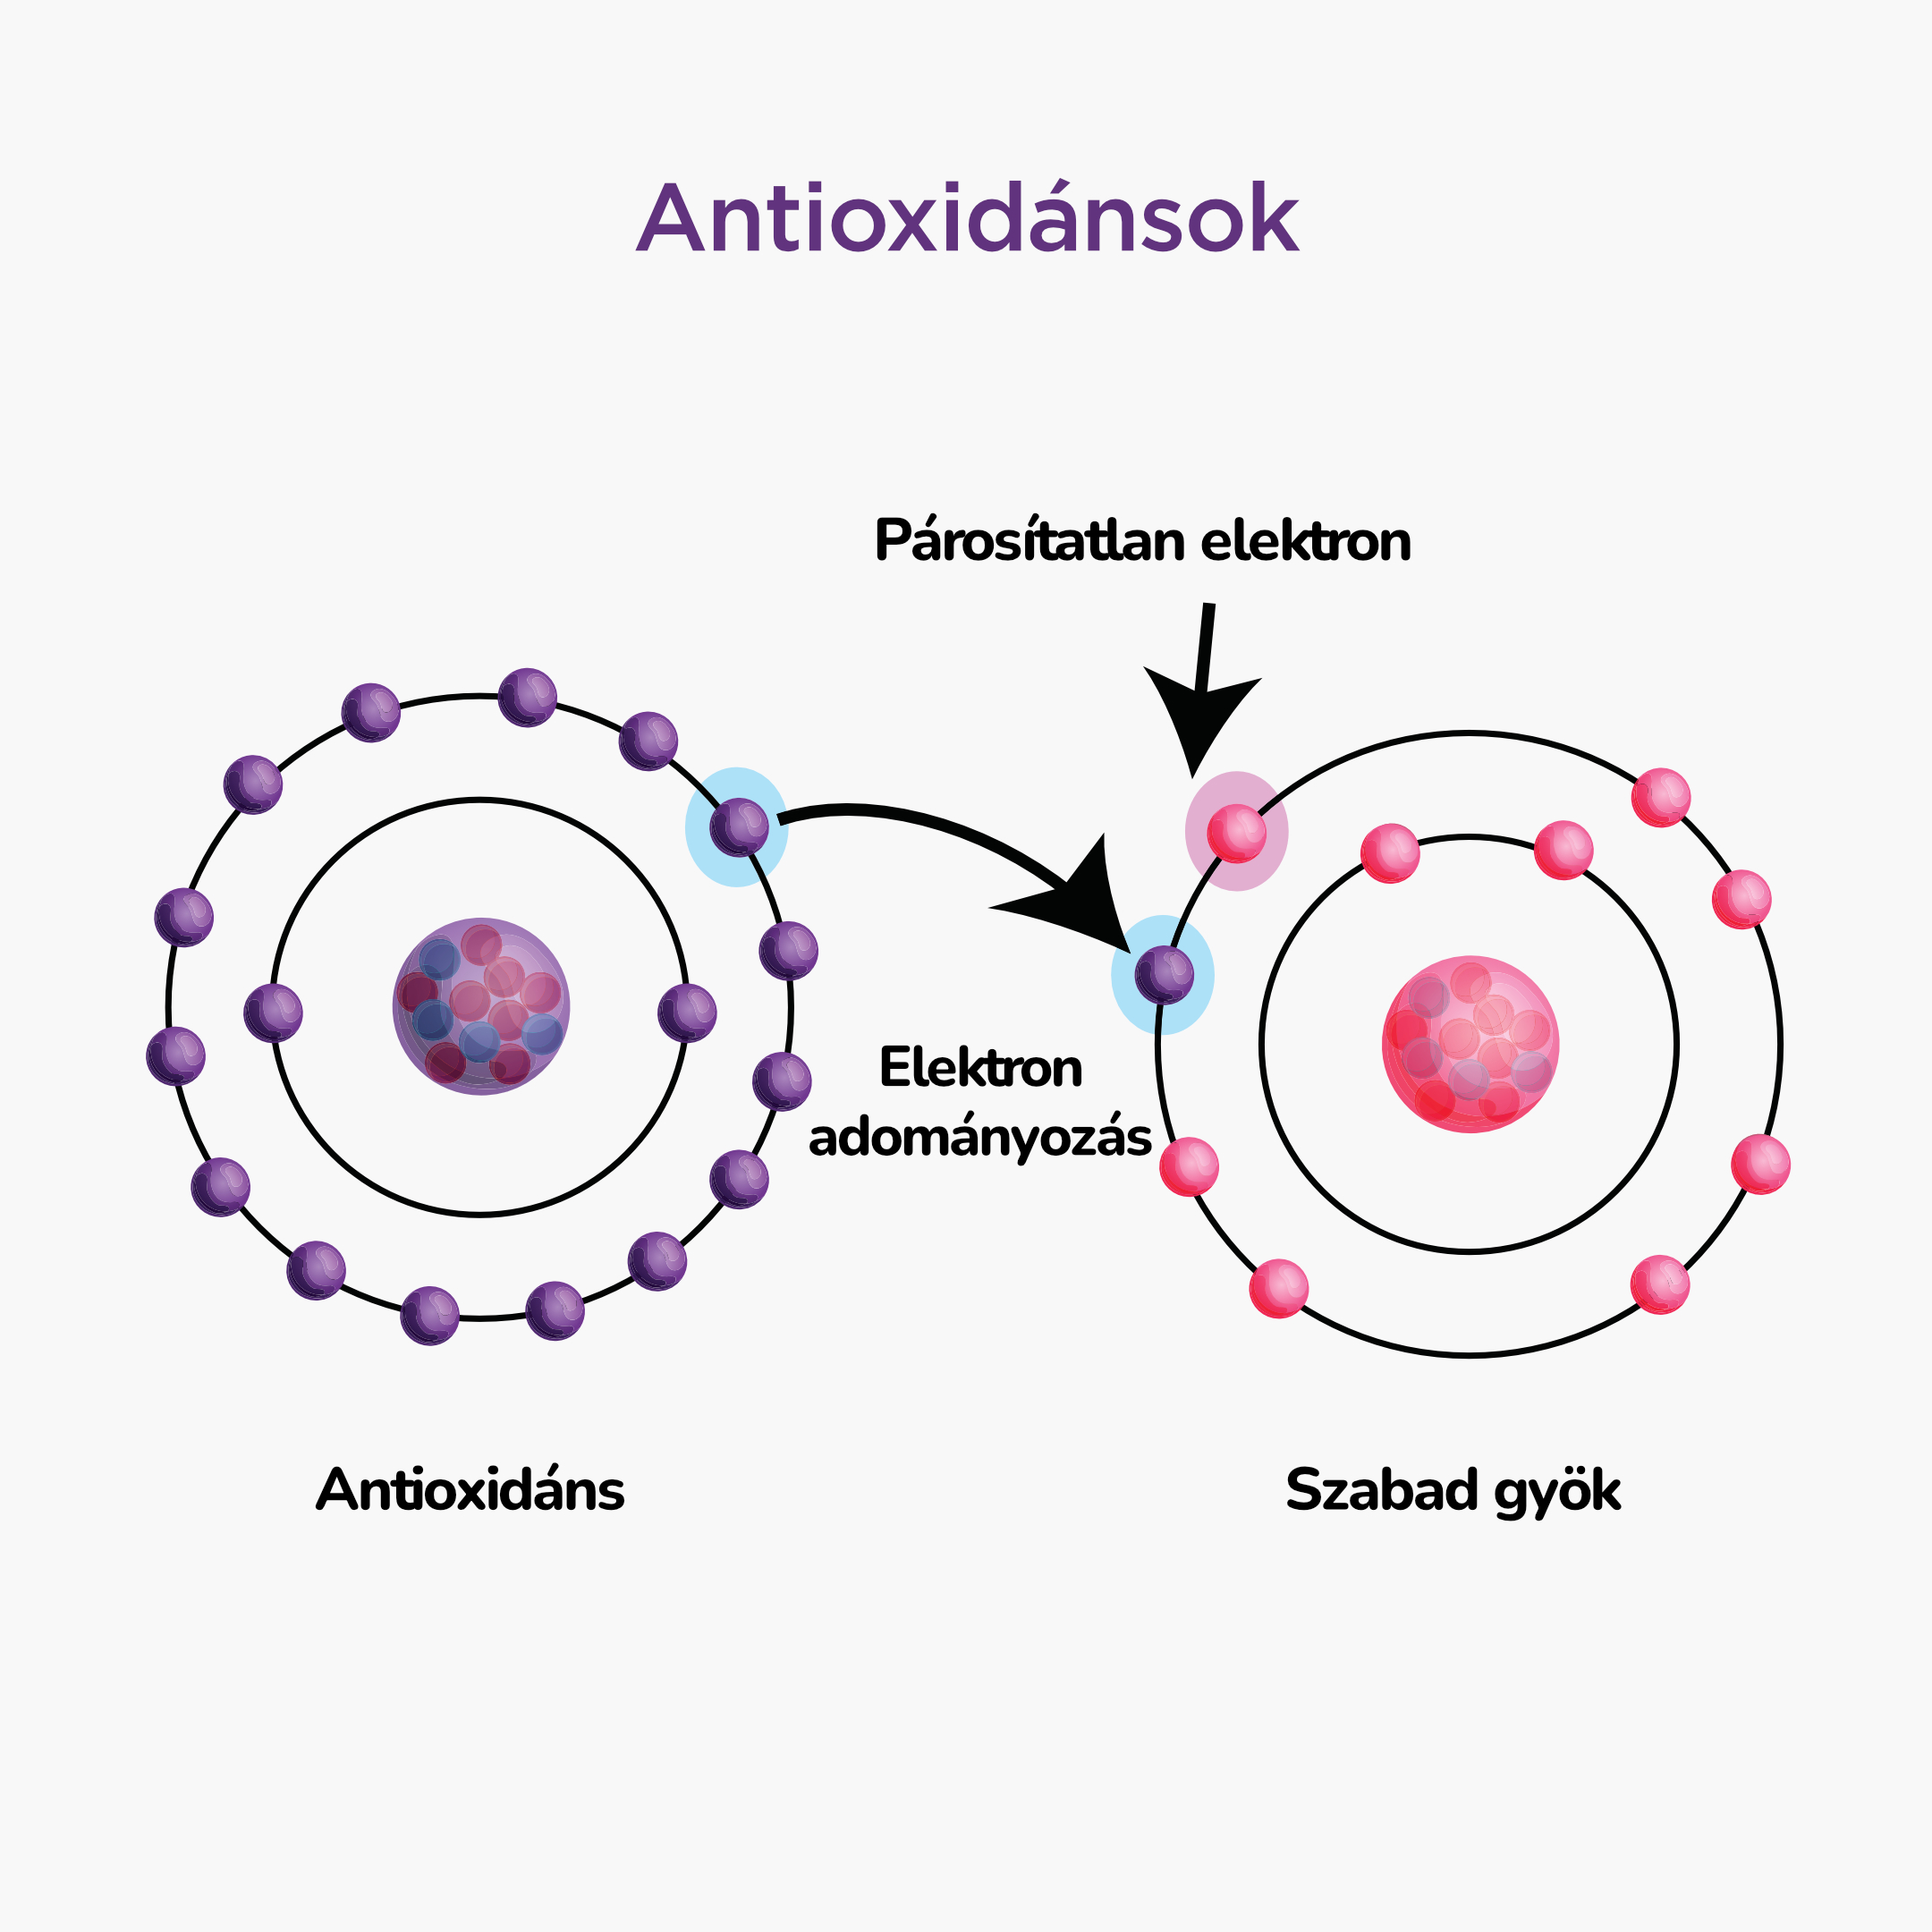 antioxidants_infografika_2_cz